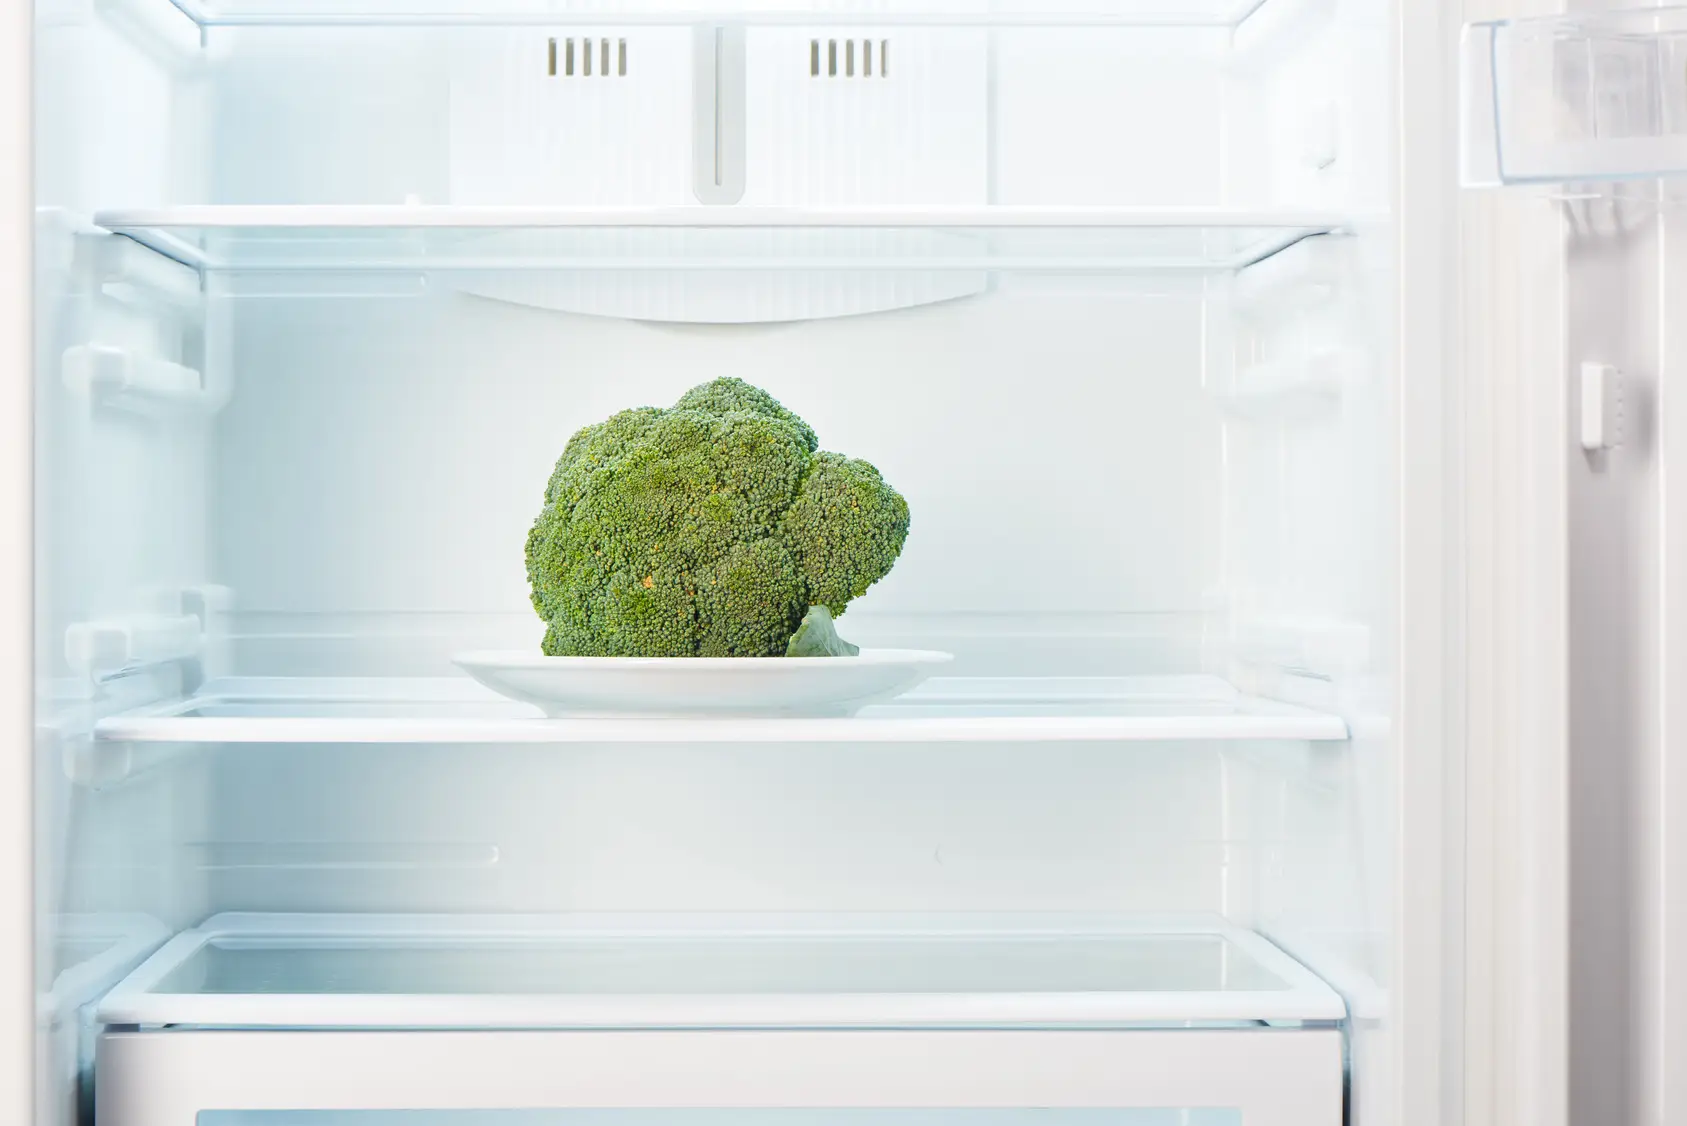 Broccoli in the fridge